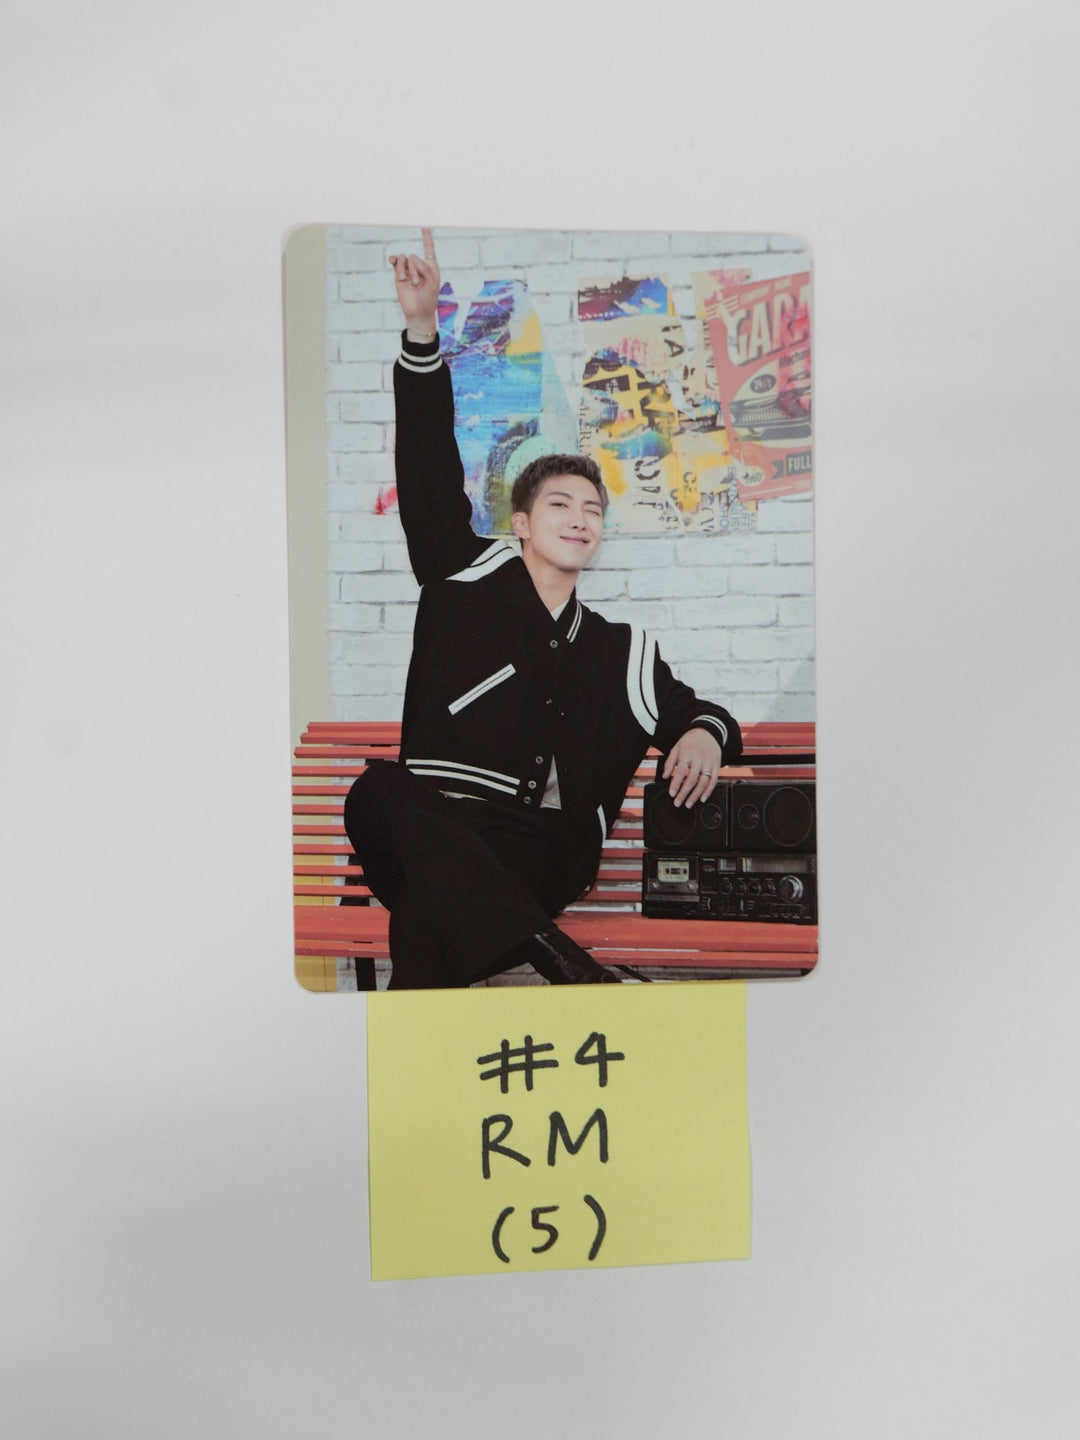 BTS "Permission To Dance" - Weverse Shop Photocard [Jung kook, RM]